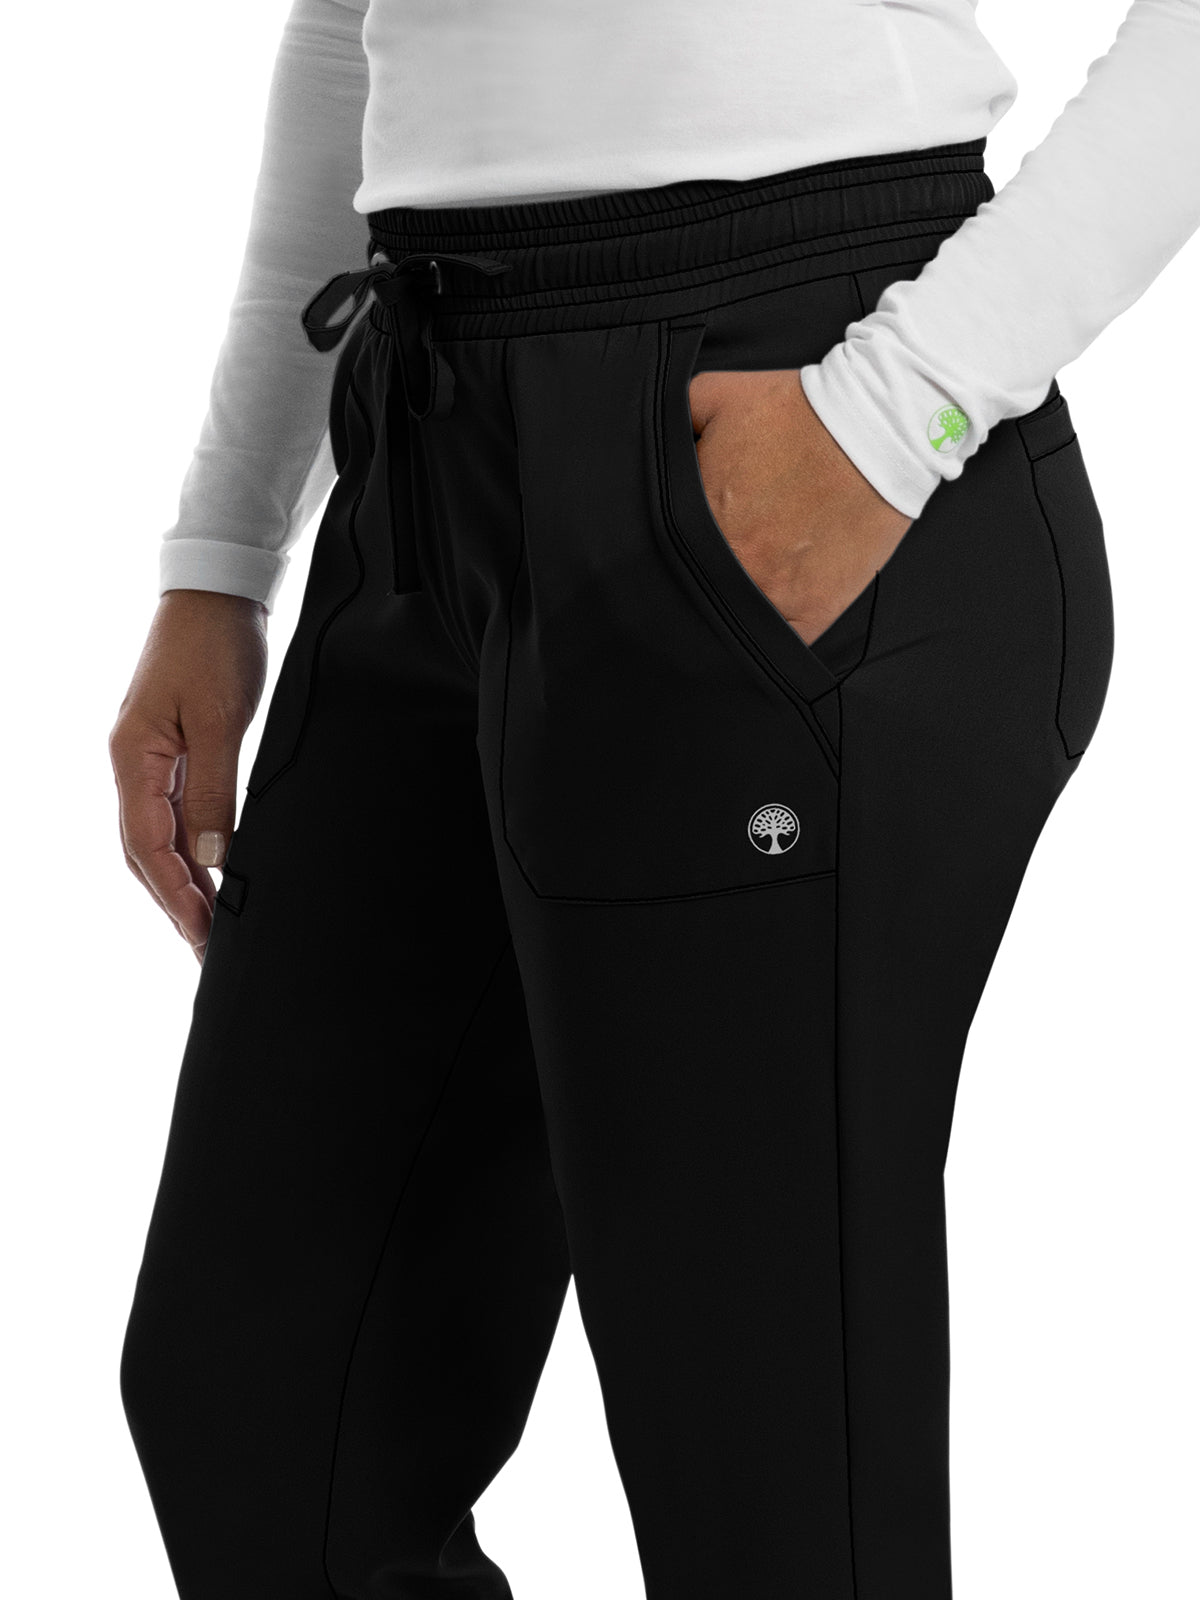 Women's Four-Way Stretch Fabric Pant - 9575 - Black